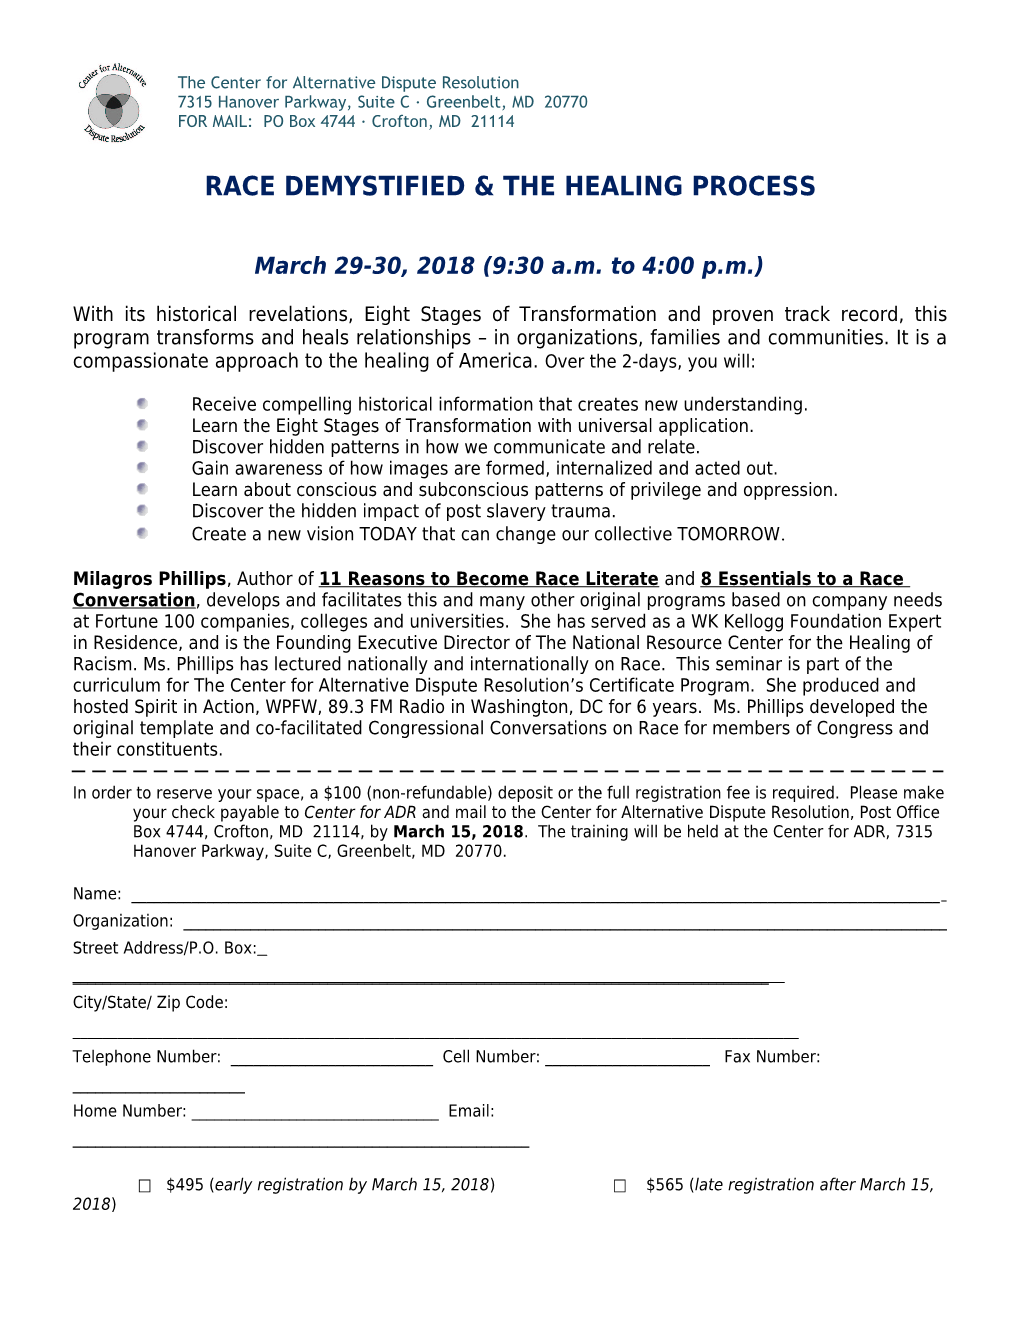 Race Demystified & the Healing Process